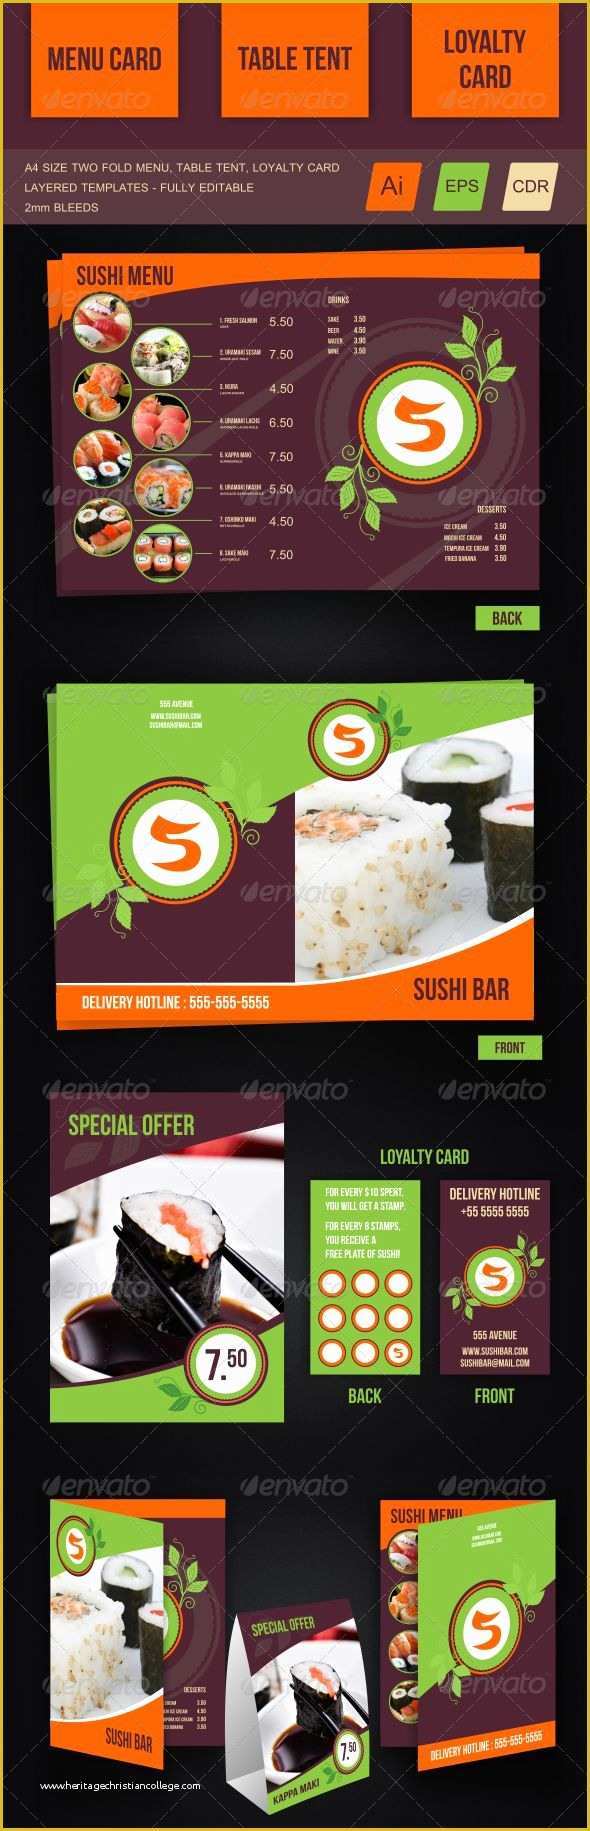 Sushi Menu Template Free Download Of Sushi Menu Template